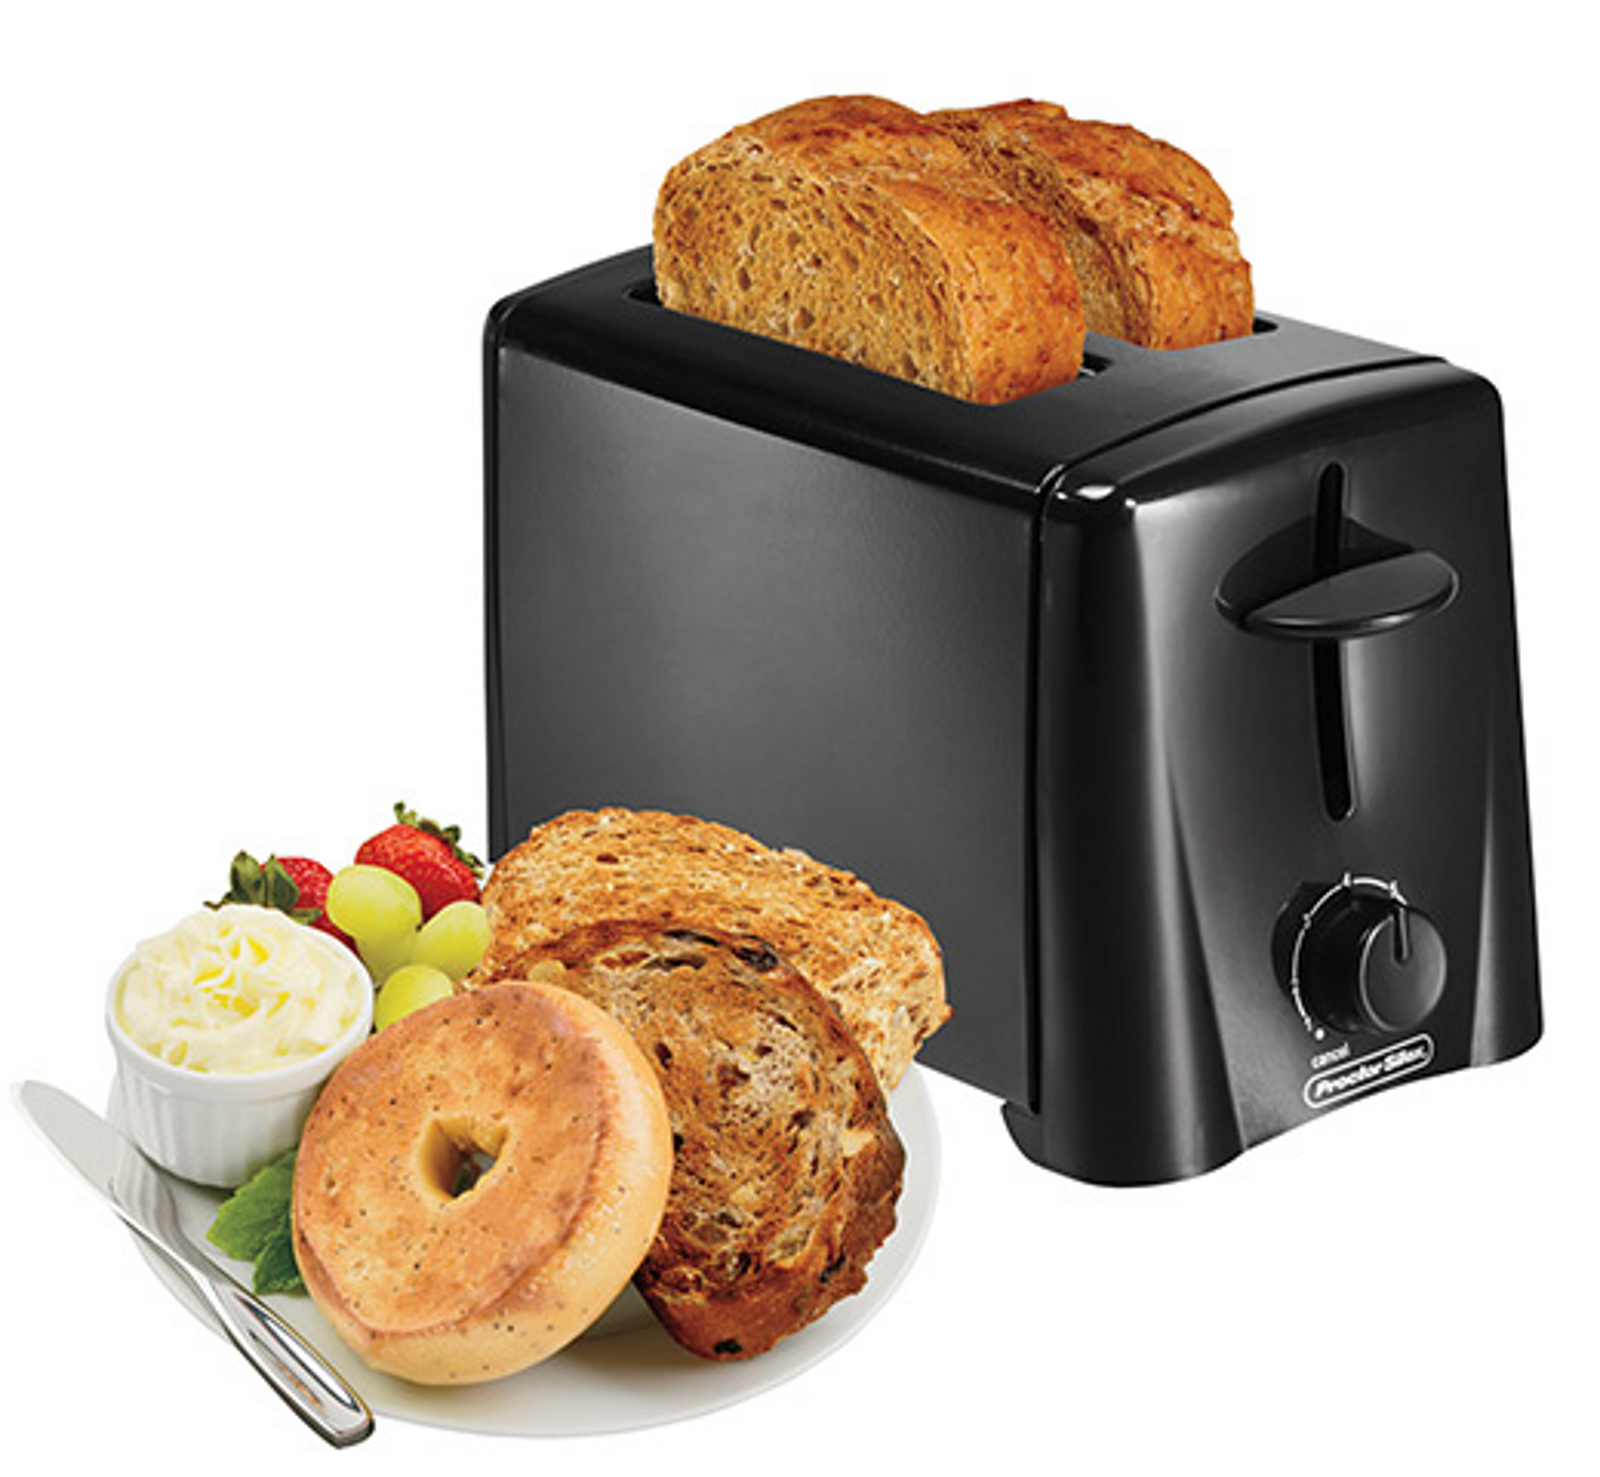 Proctor Silex 2-slice Toaster Only $7.99!